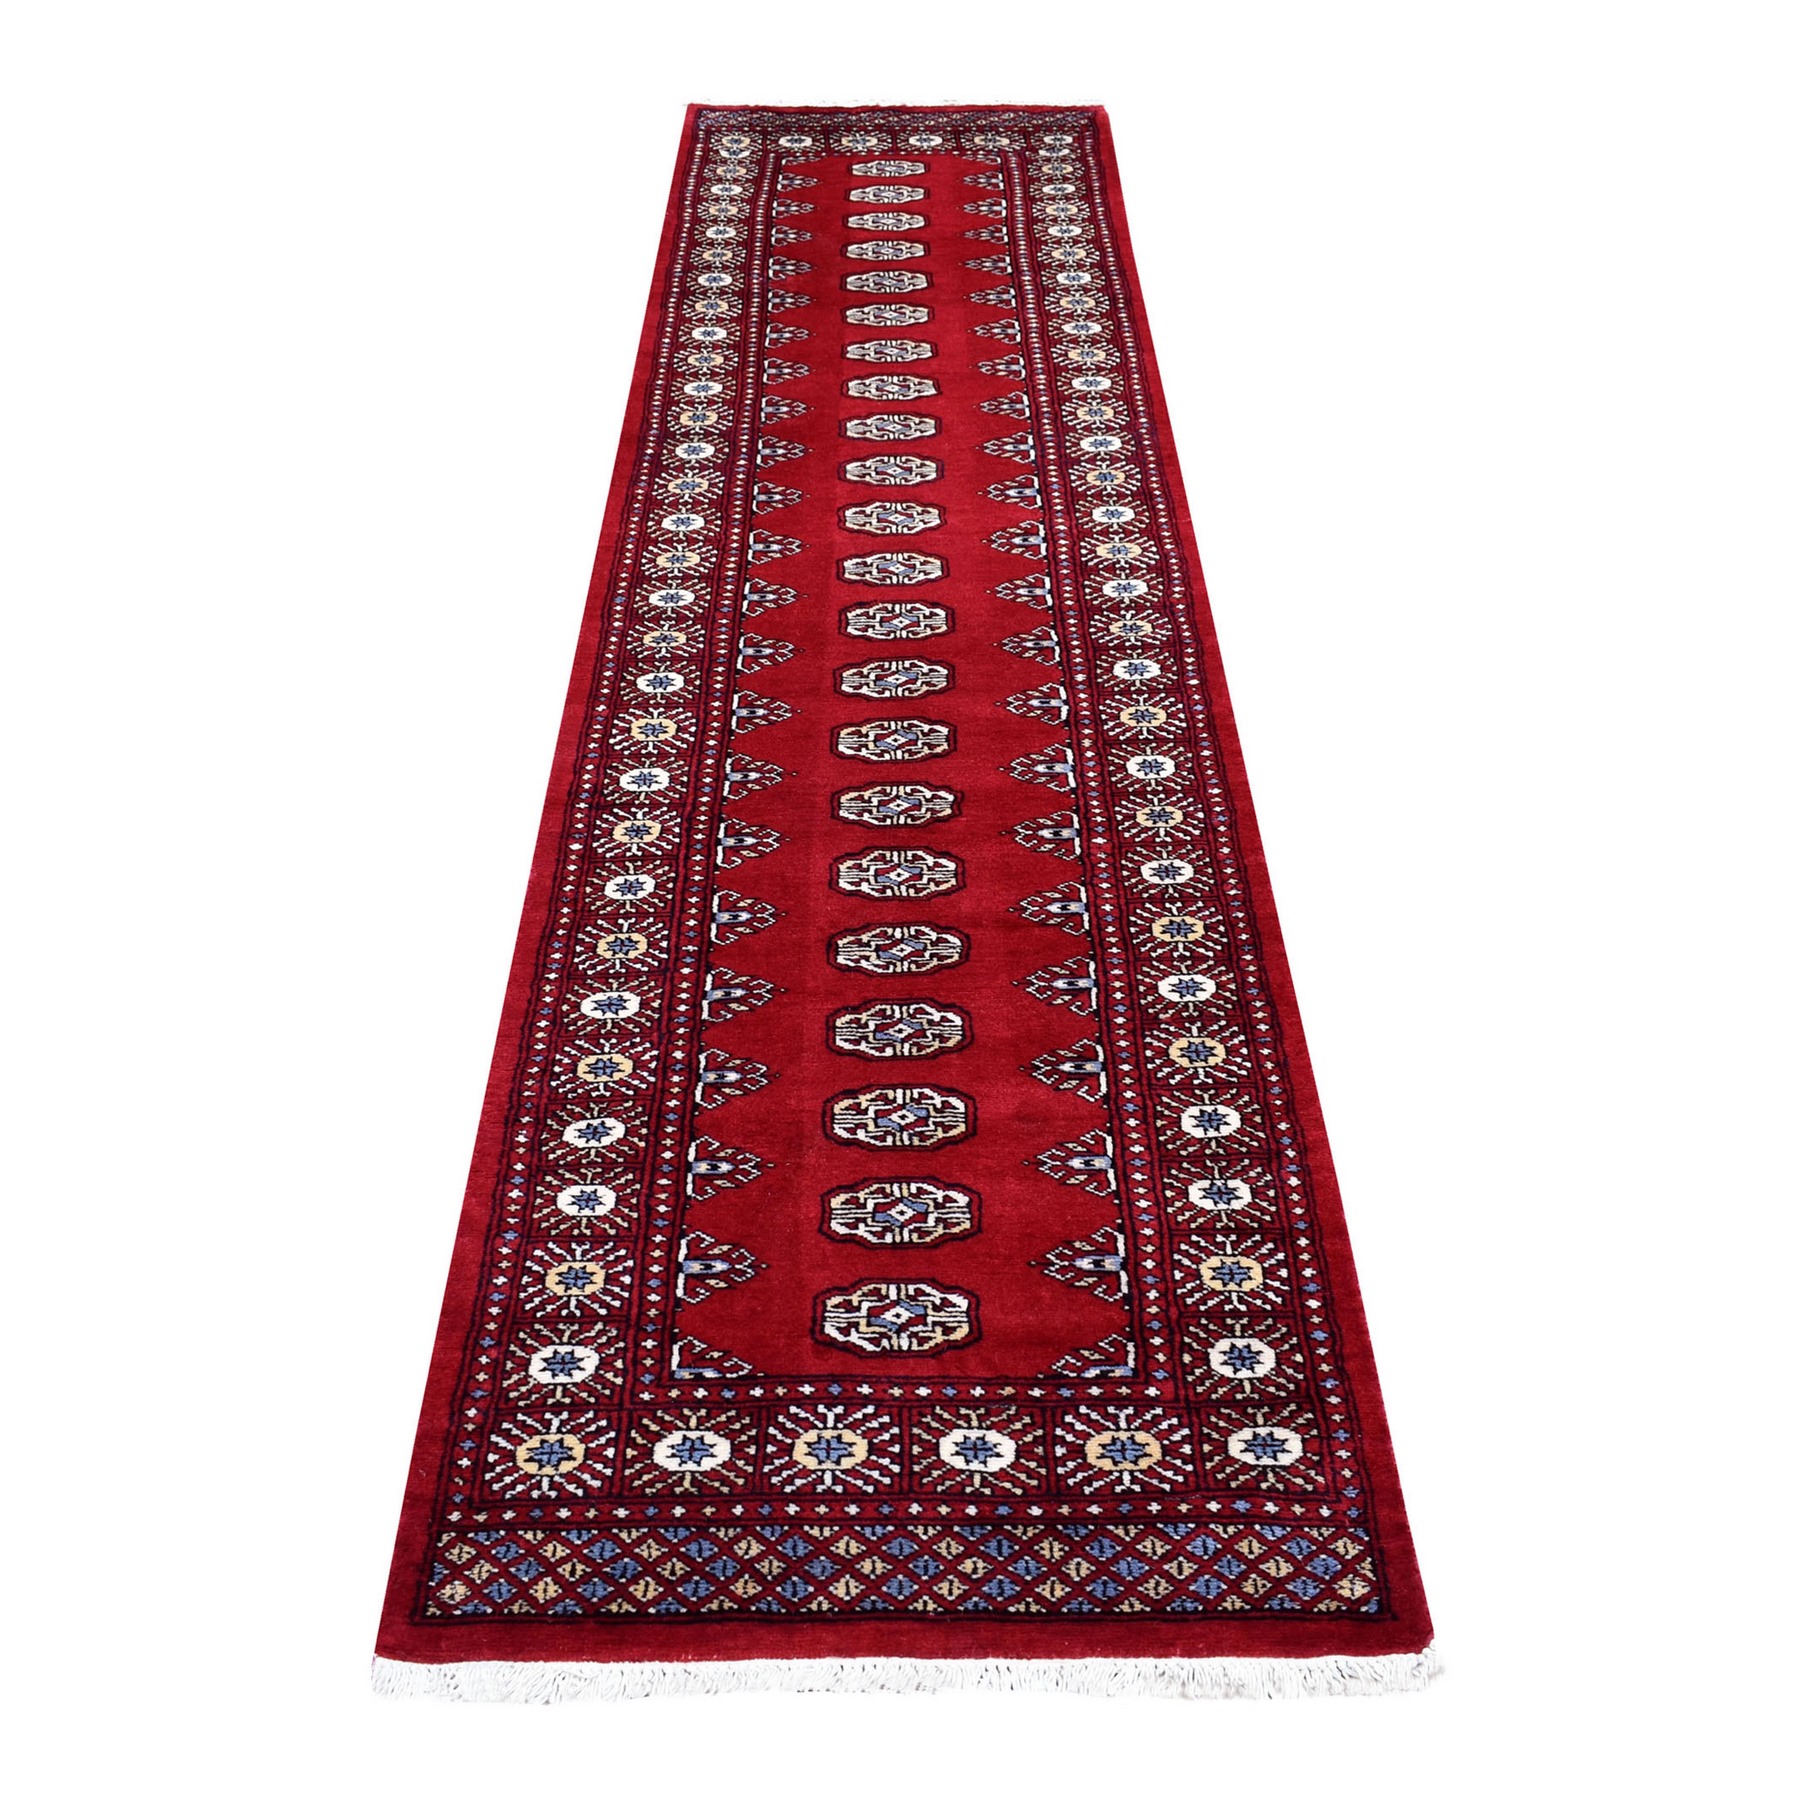 2'6"x9'7" Rich Red Mori Bokara Hand Woven Silky Wool Oriental Runner Rug 